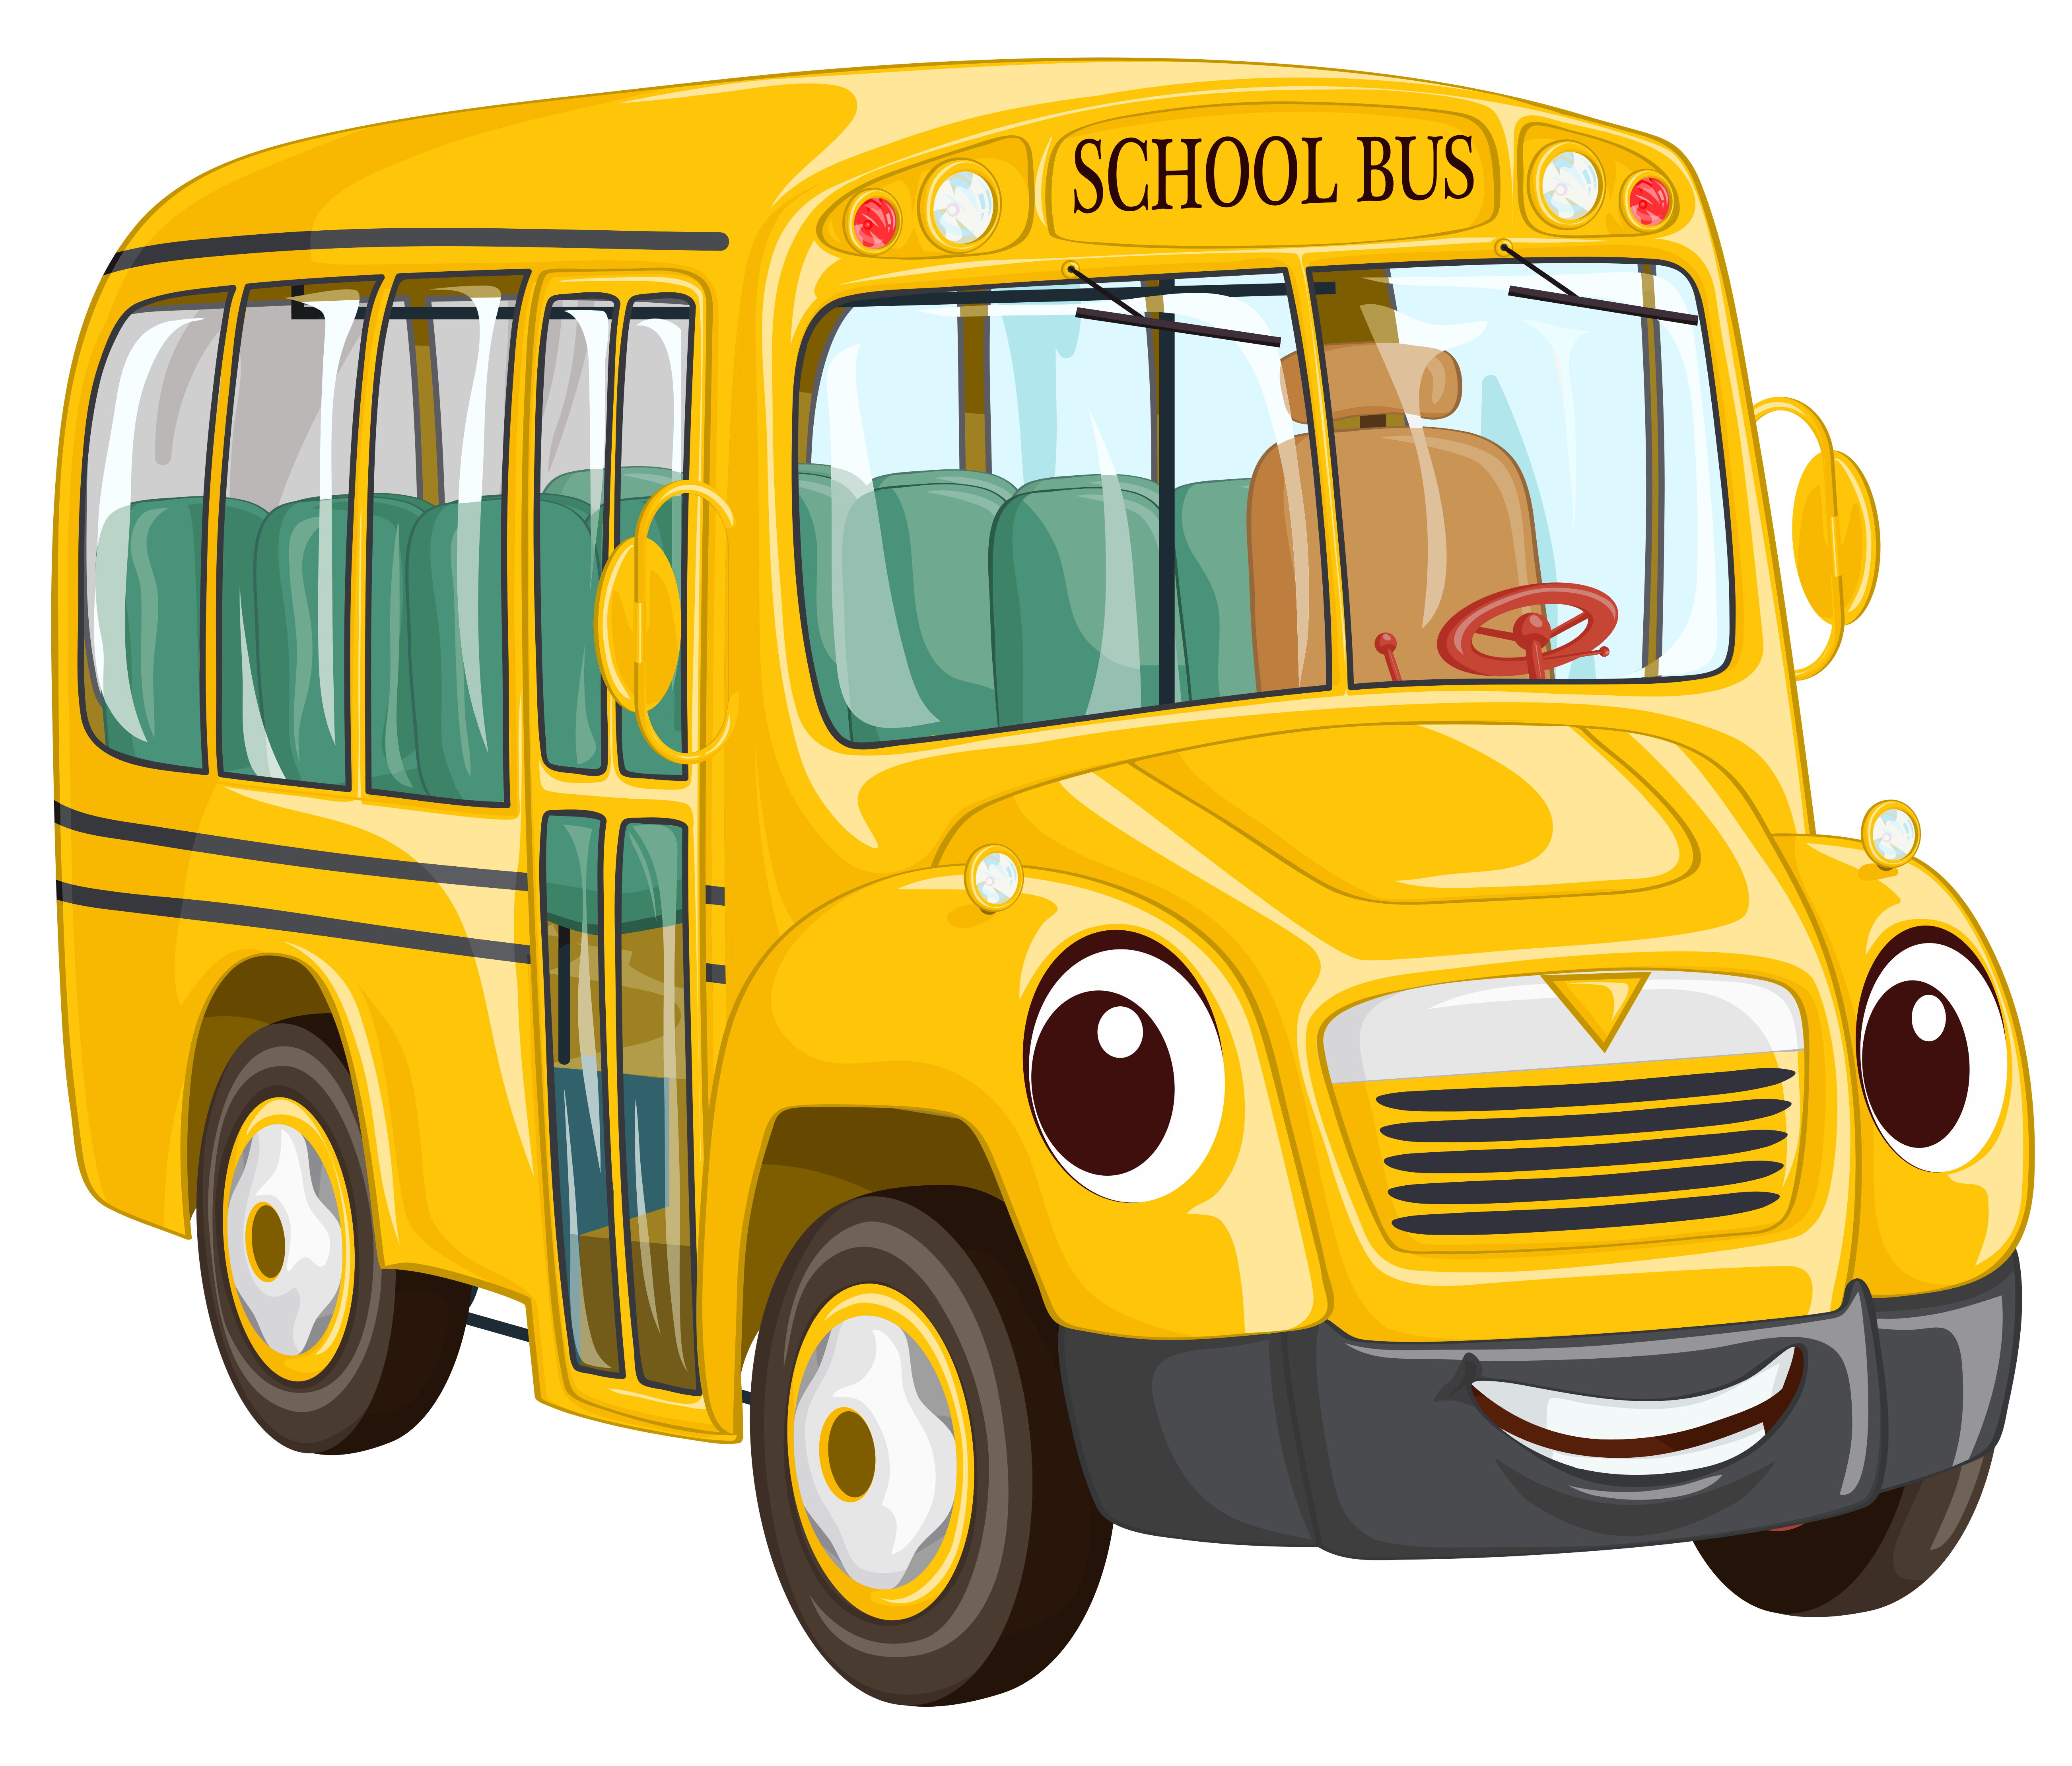 School bus clipart images 3 school bus clip art vector 5 2